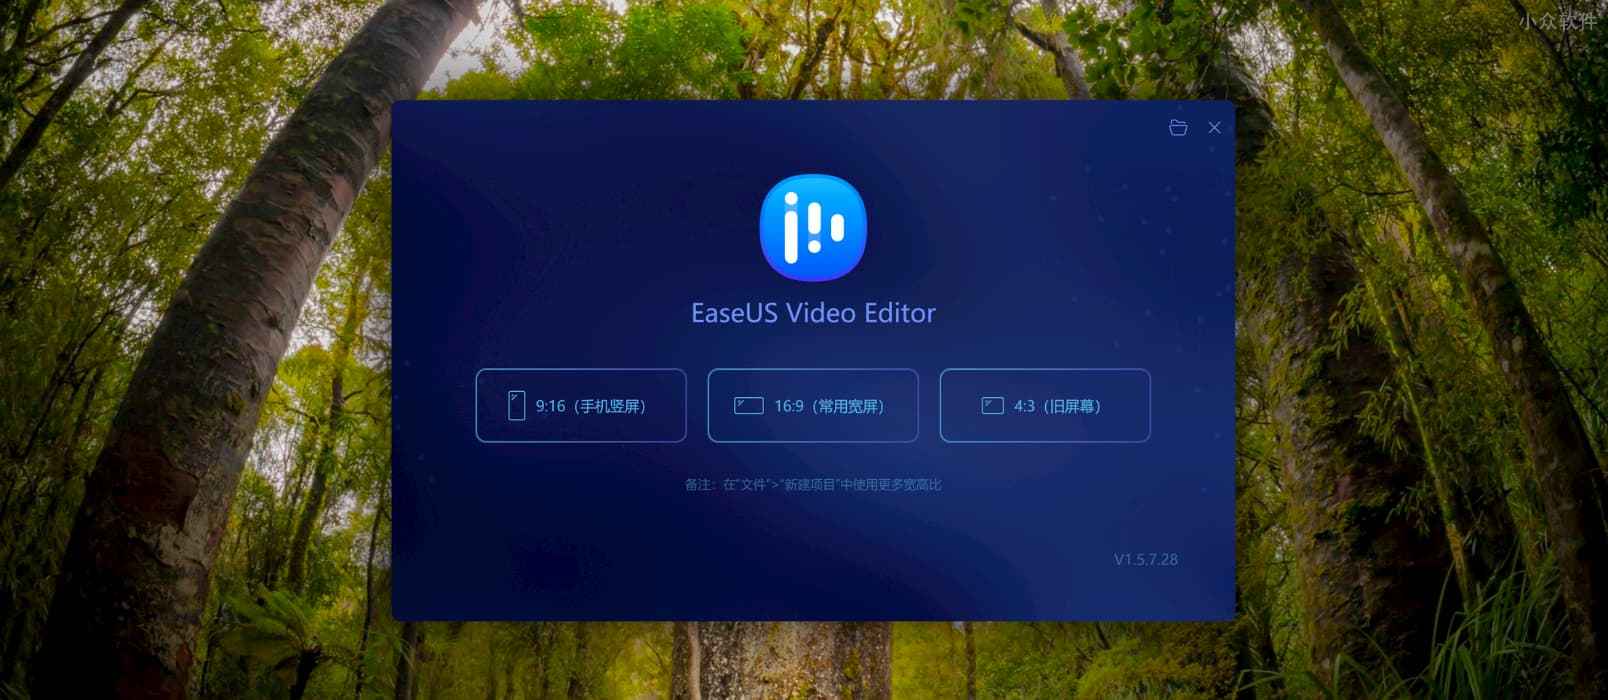 EaseUS Video Editor - 简单易用的视频编辑器，限免一个月 1